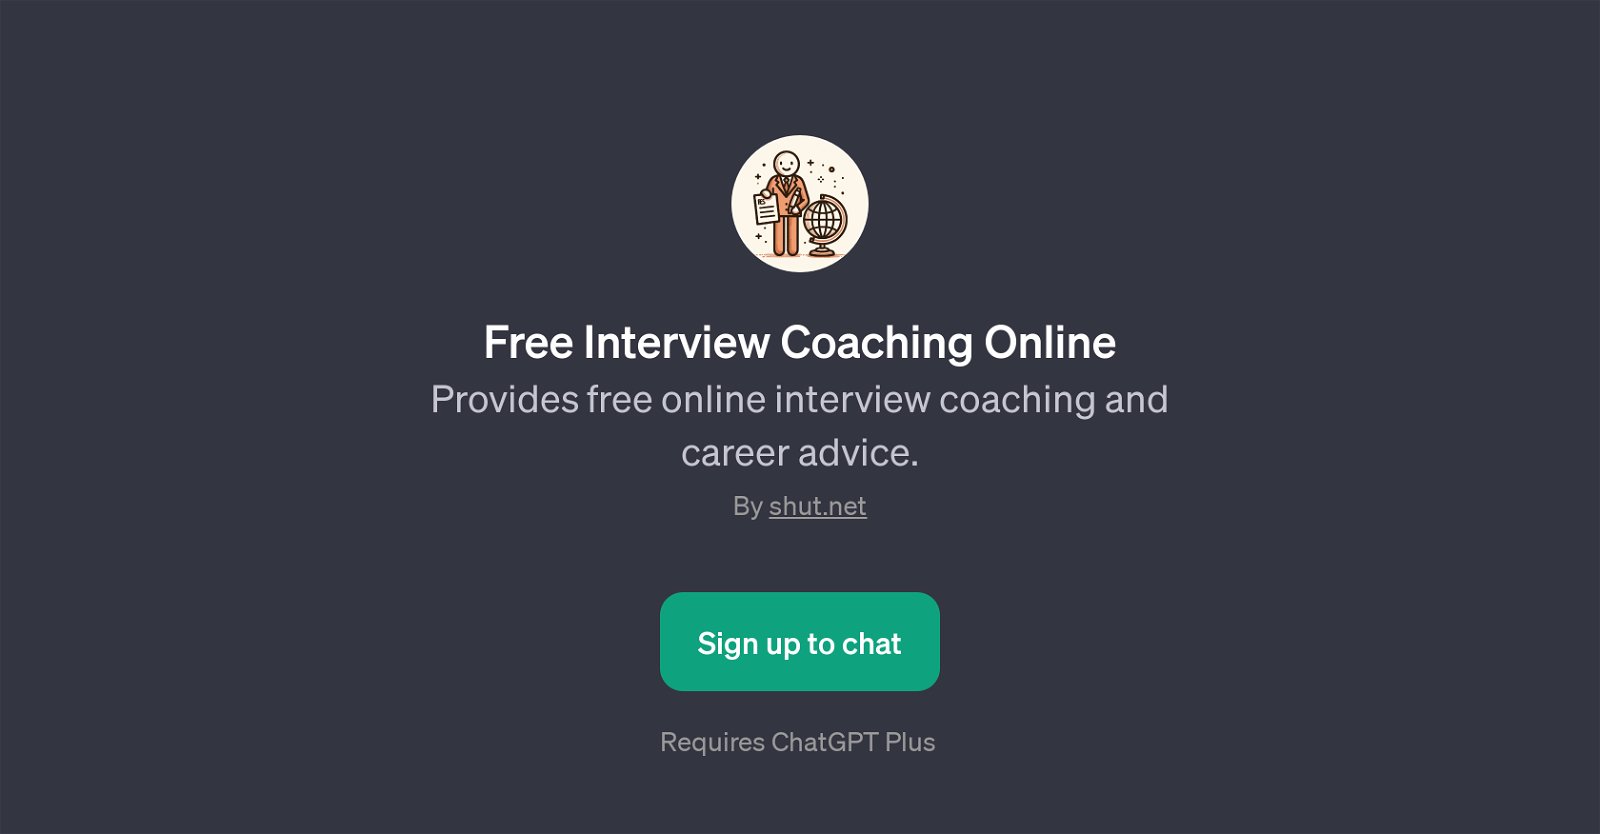 Free Interview Coaching Online website